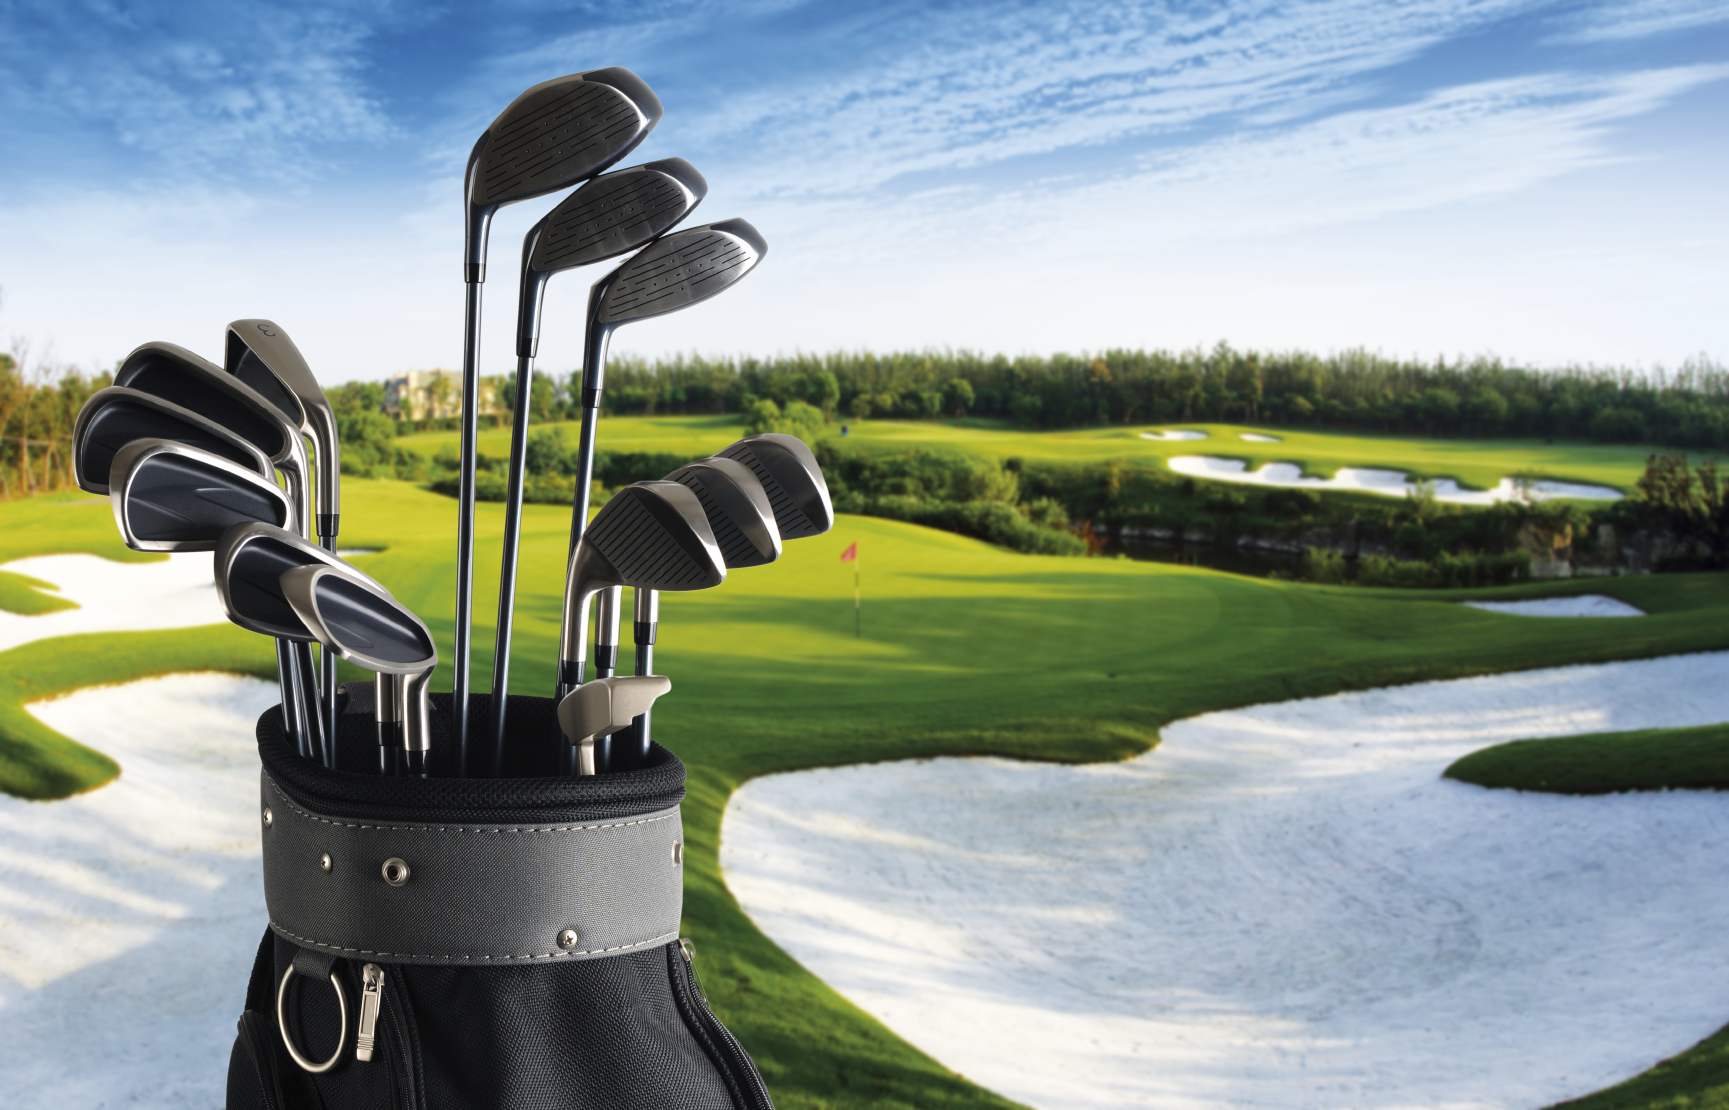 boiler College bod 5 Best Websites to Buy Discount Golf Equipment - The Golf Travel Guru